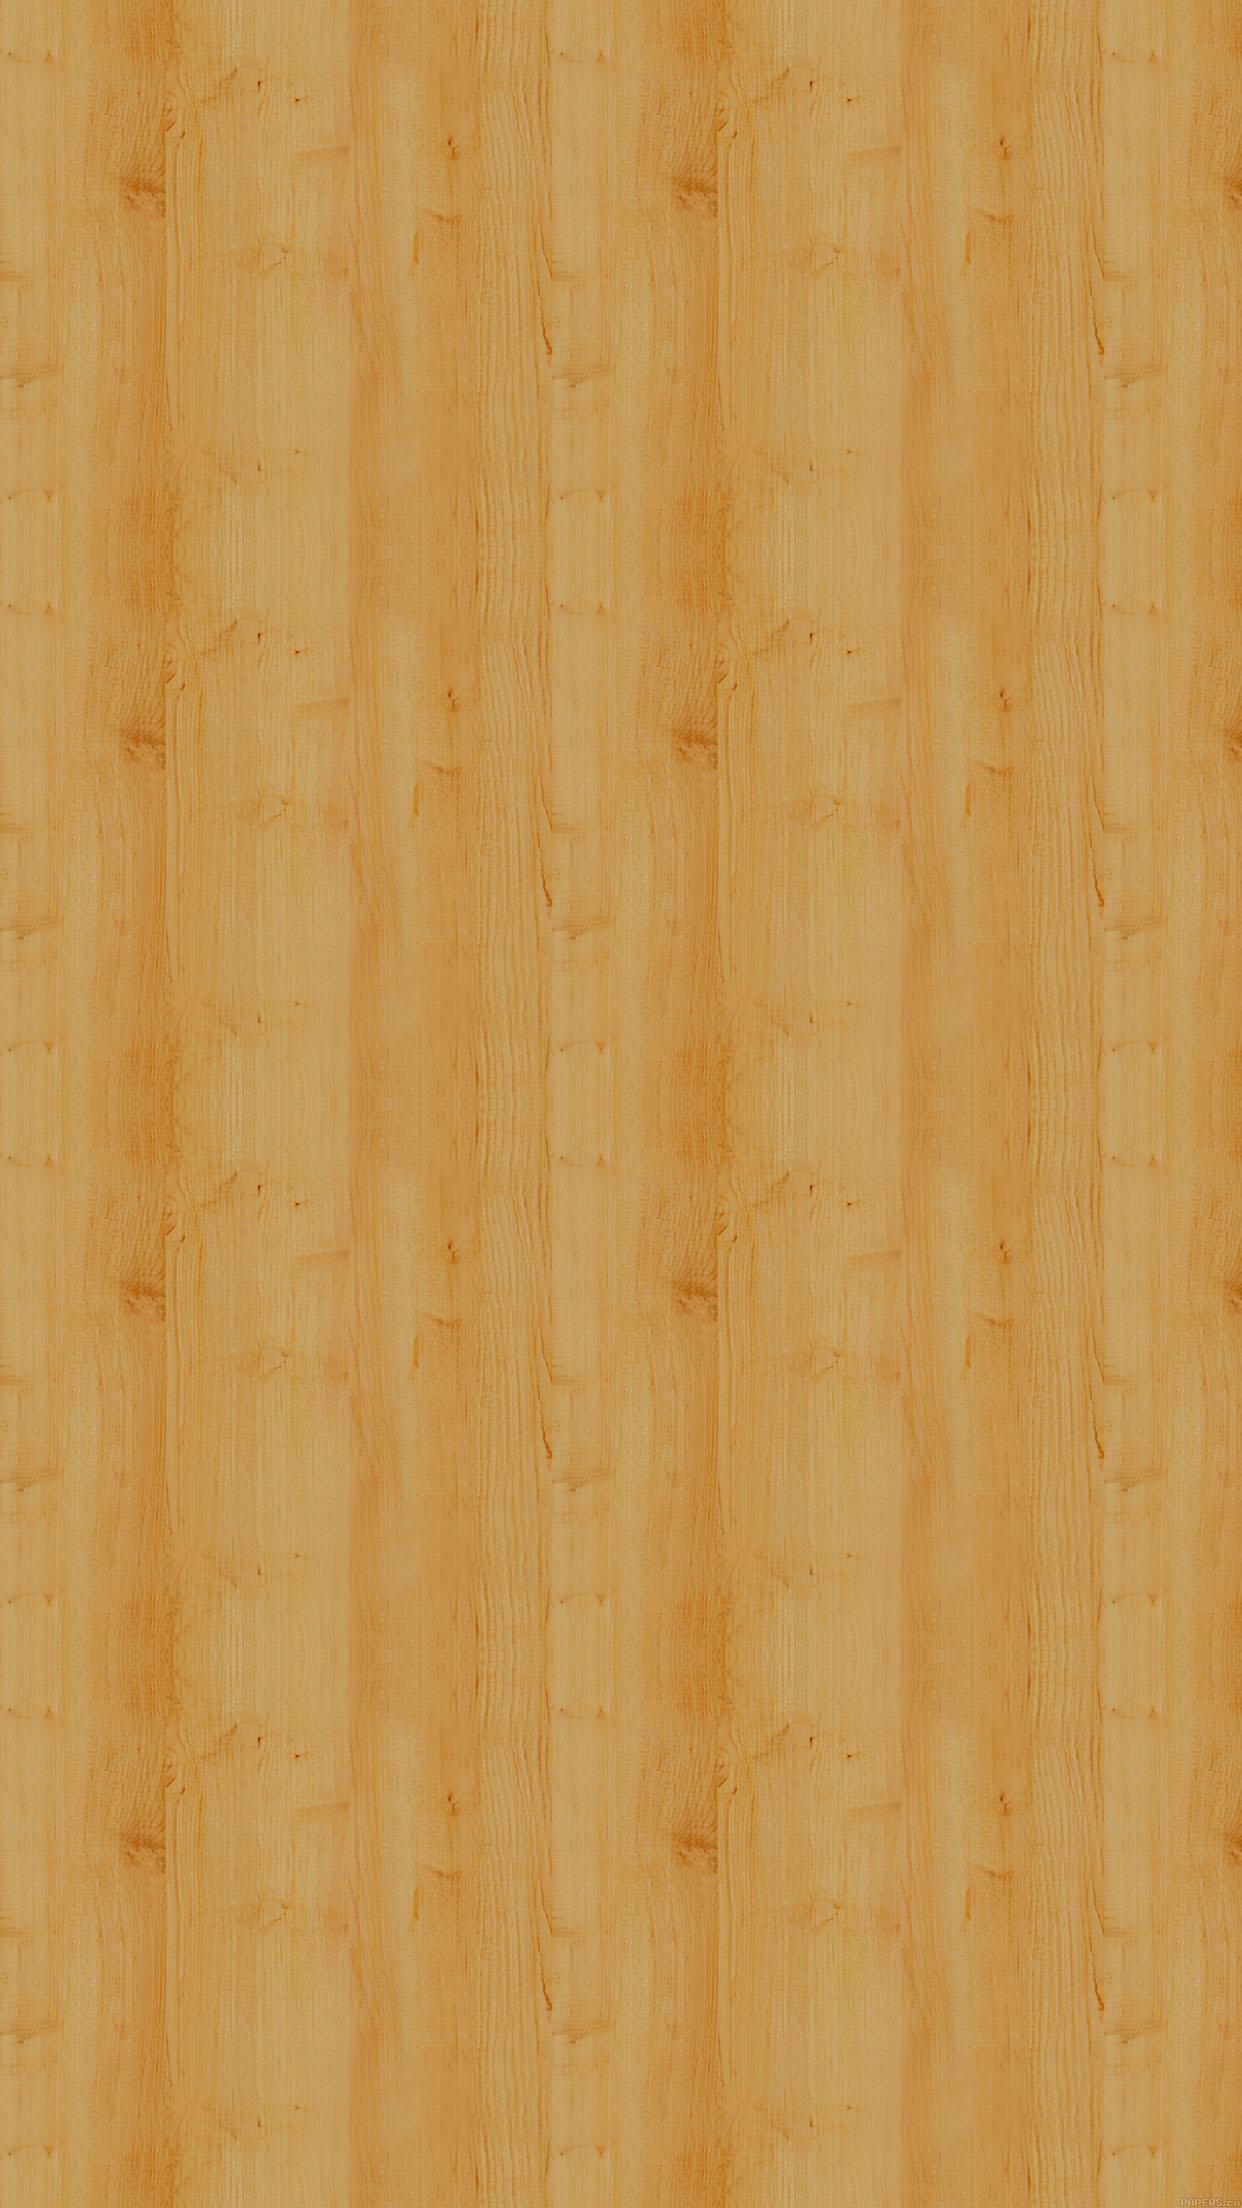 iPhone wallpaper. wallpaper wood pattern